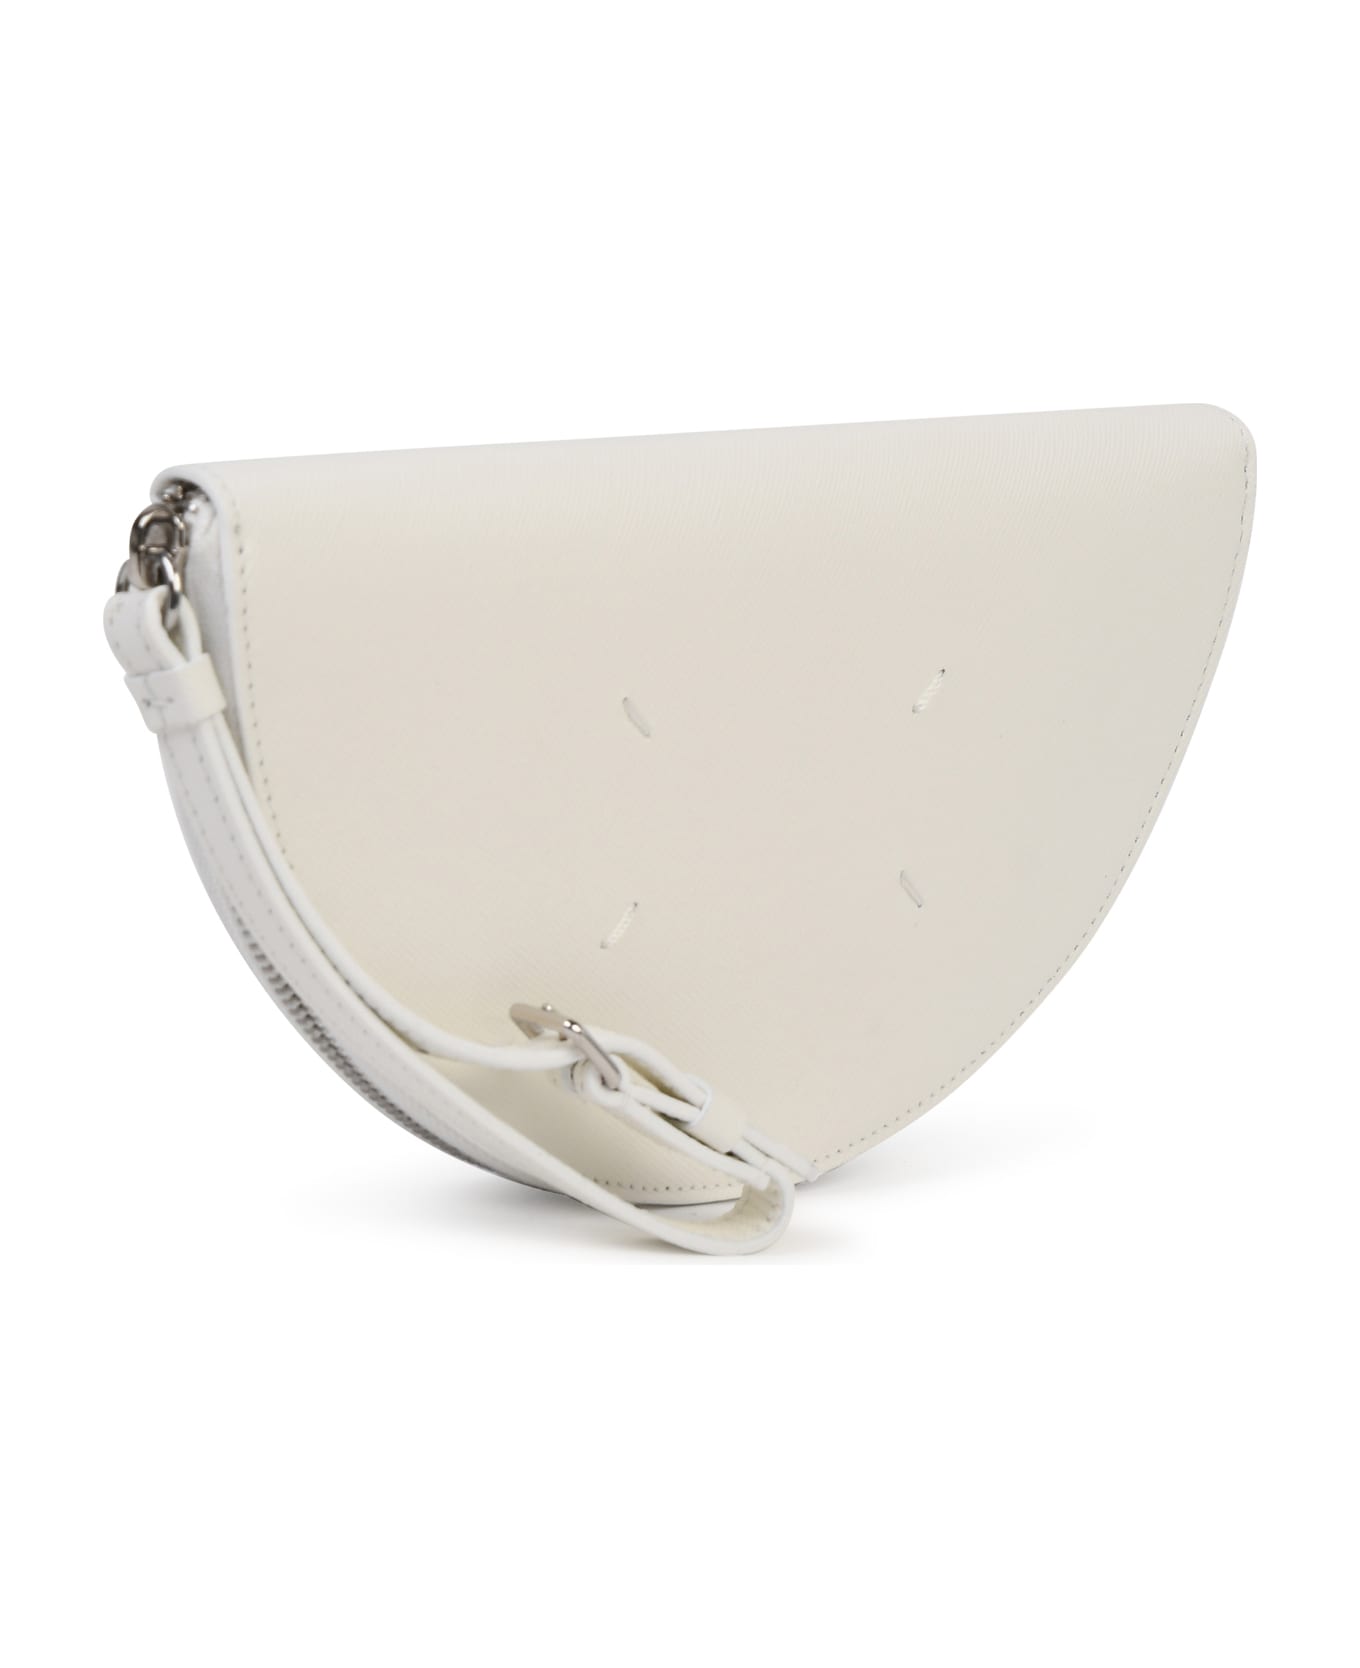 Maison Margiela White Saffiano Leather Clutch Bag - White トートバッグ